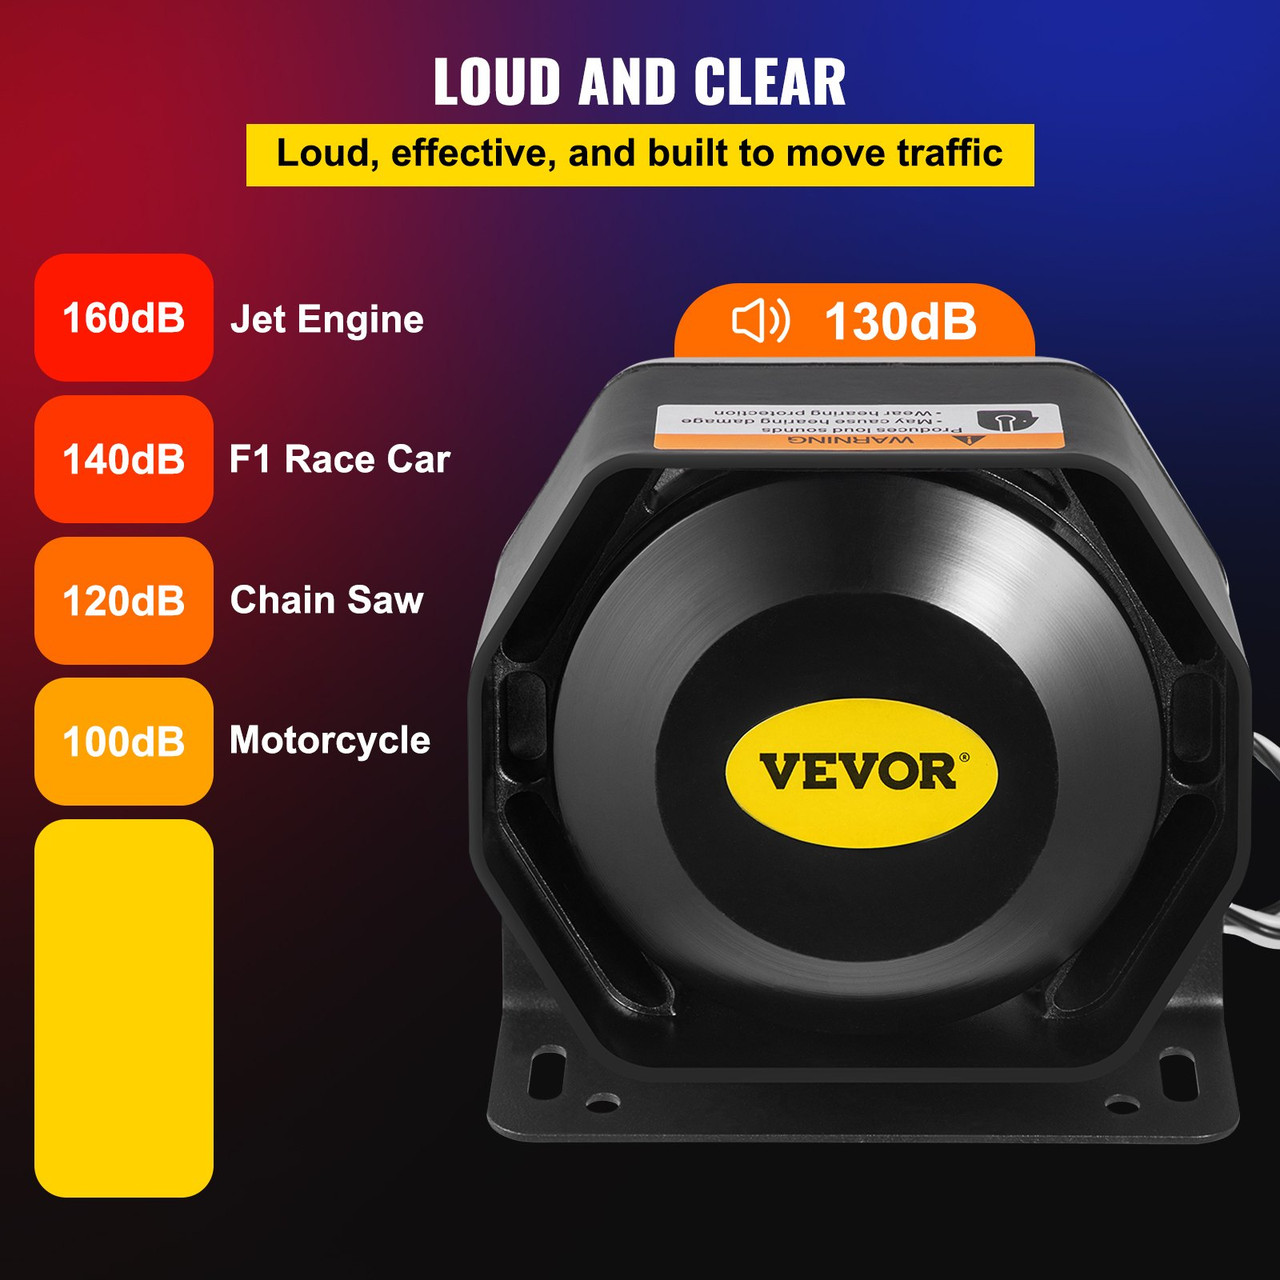 400W 8 Sound Loud Car Warning Alarm Fire Horn PA Speaker MIC System